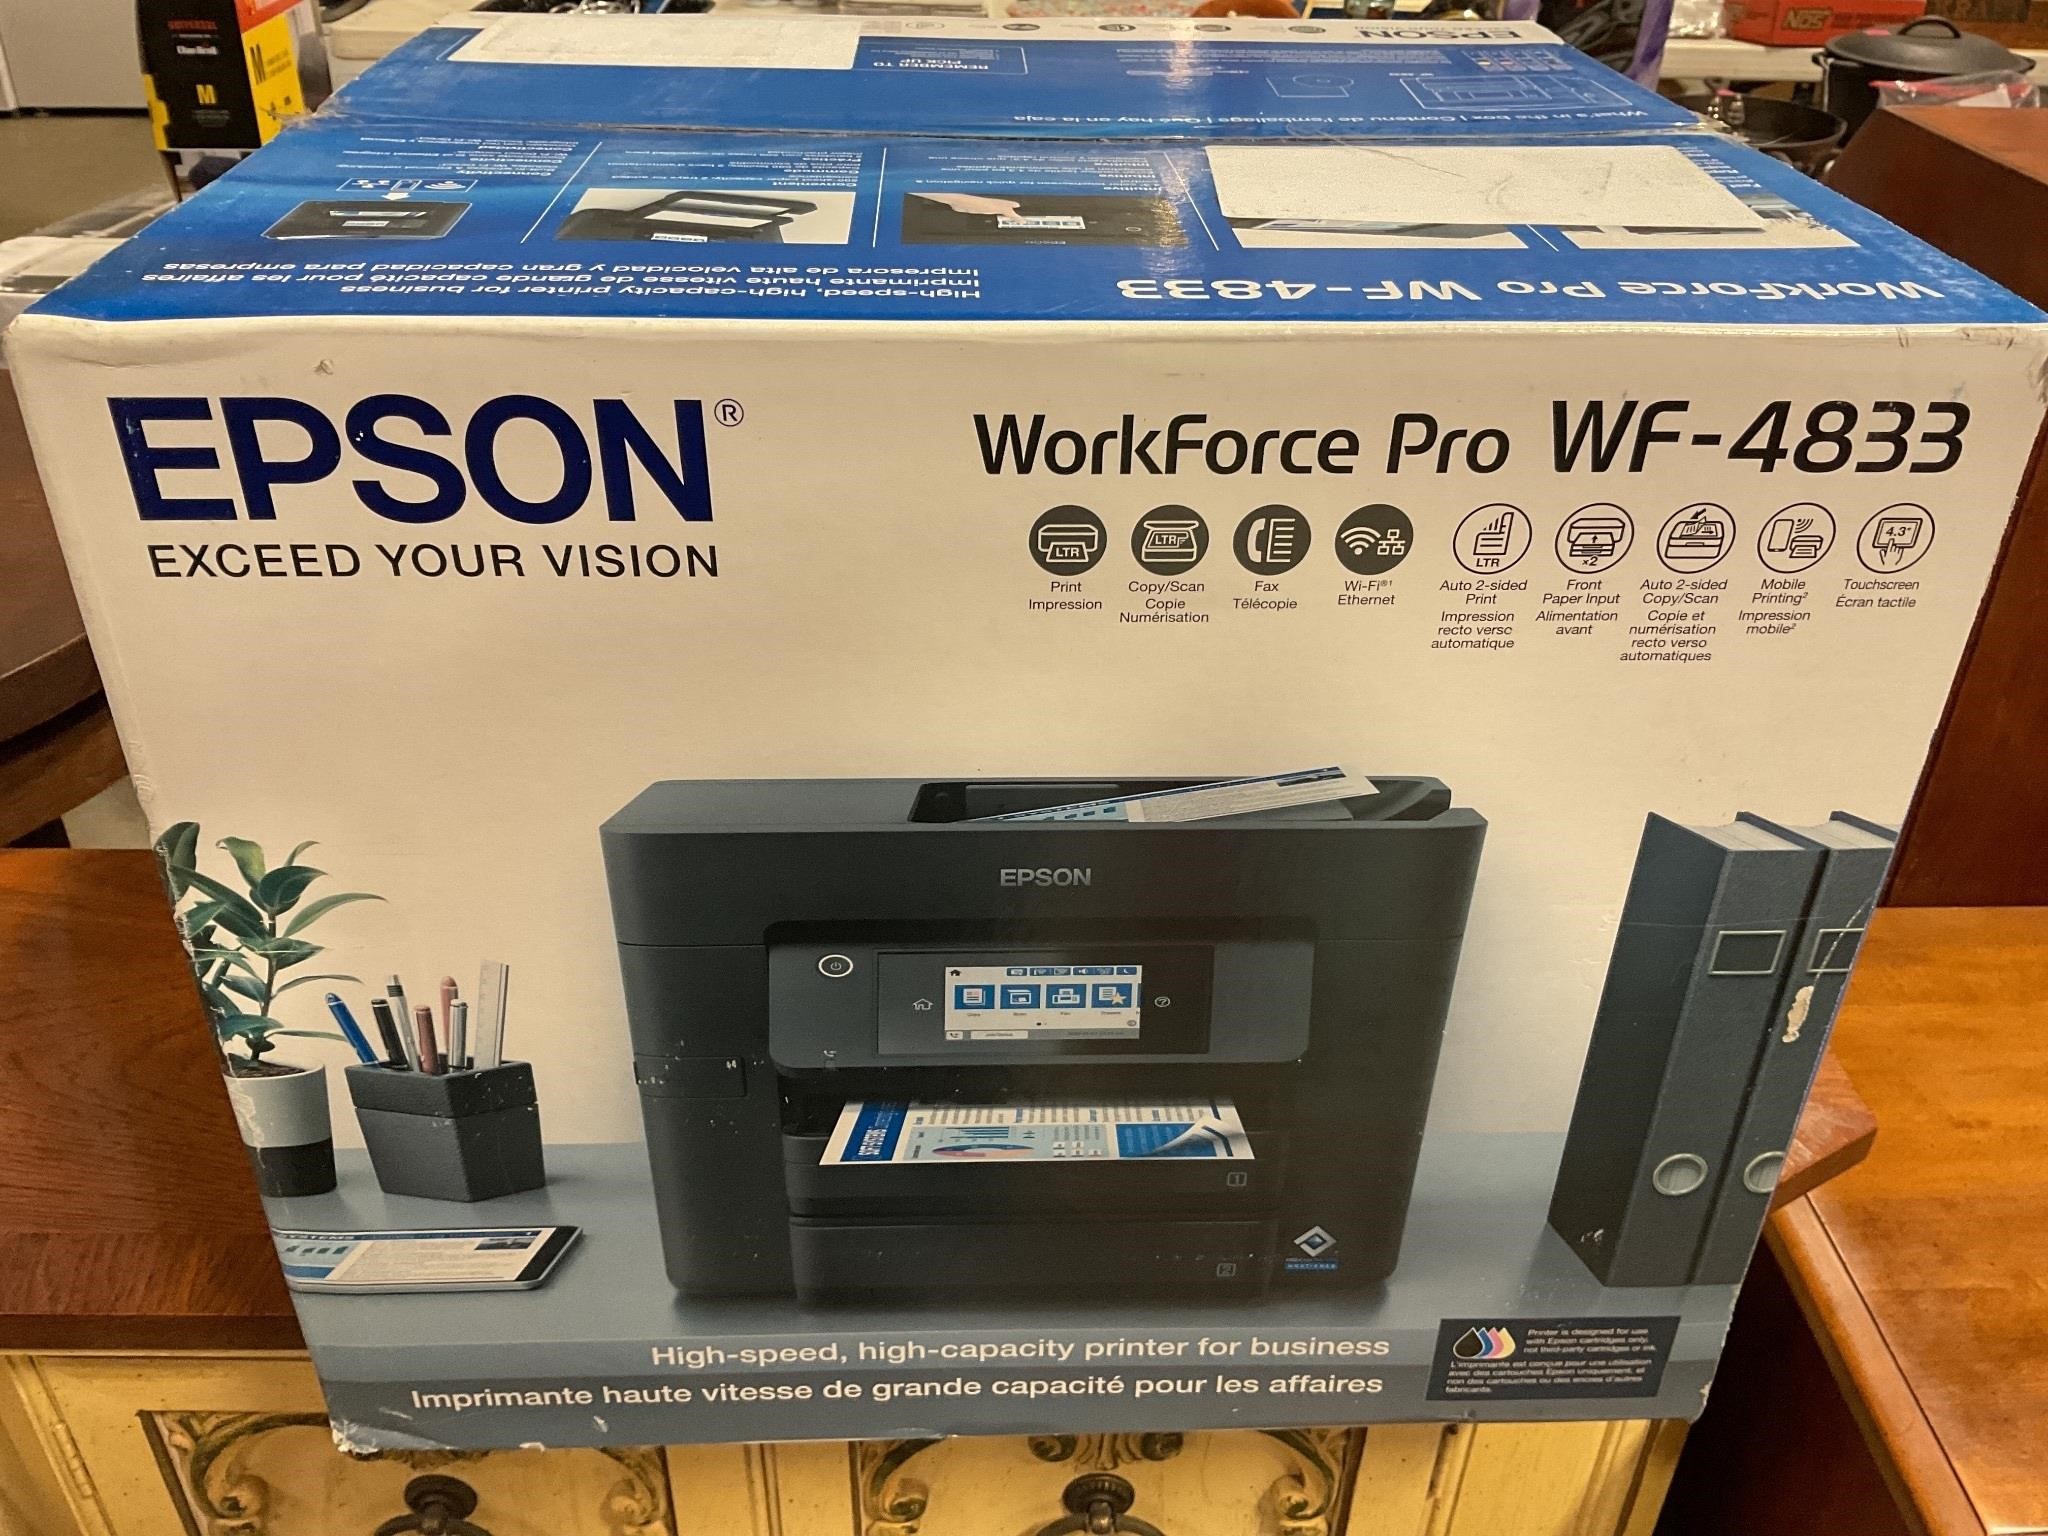 New in box Epson WF-4833 printer